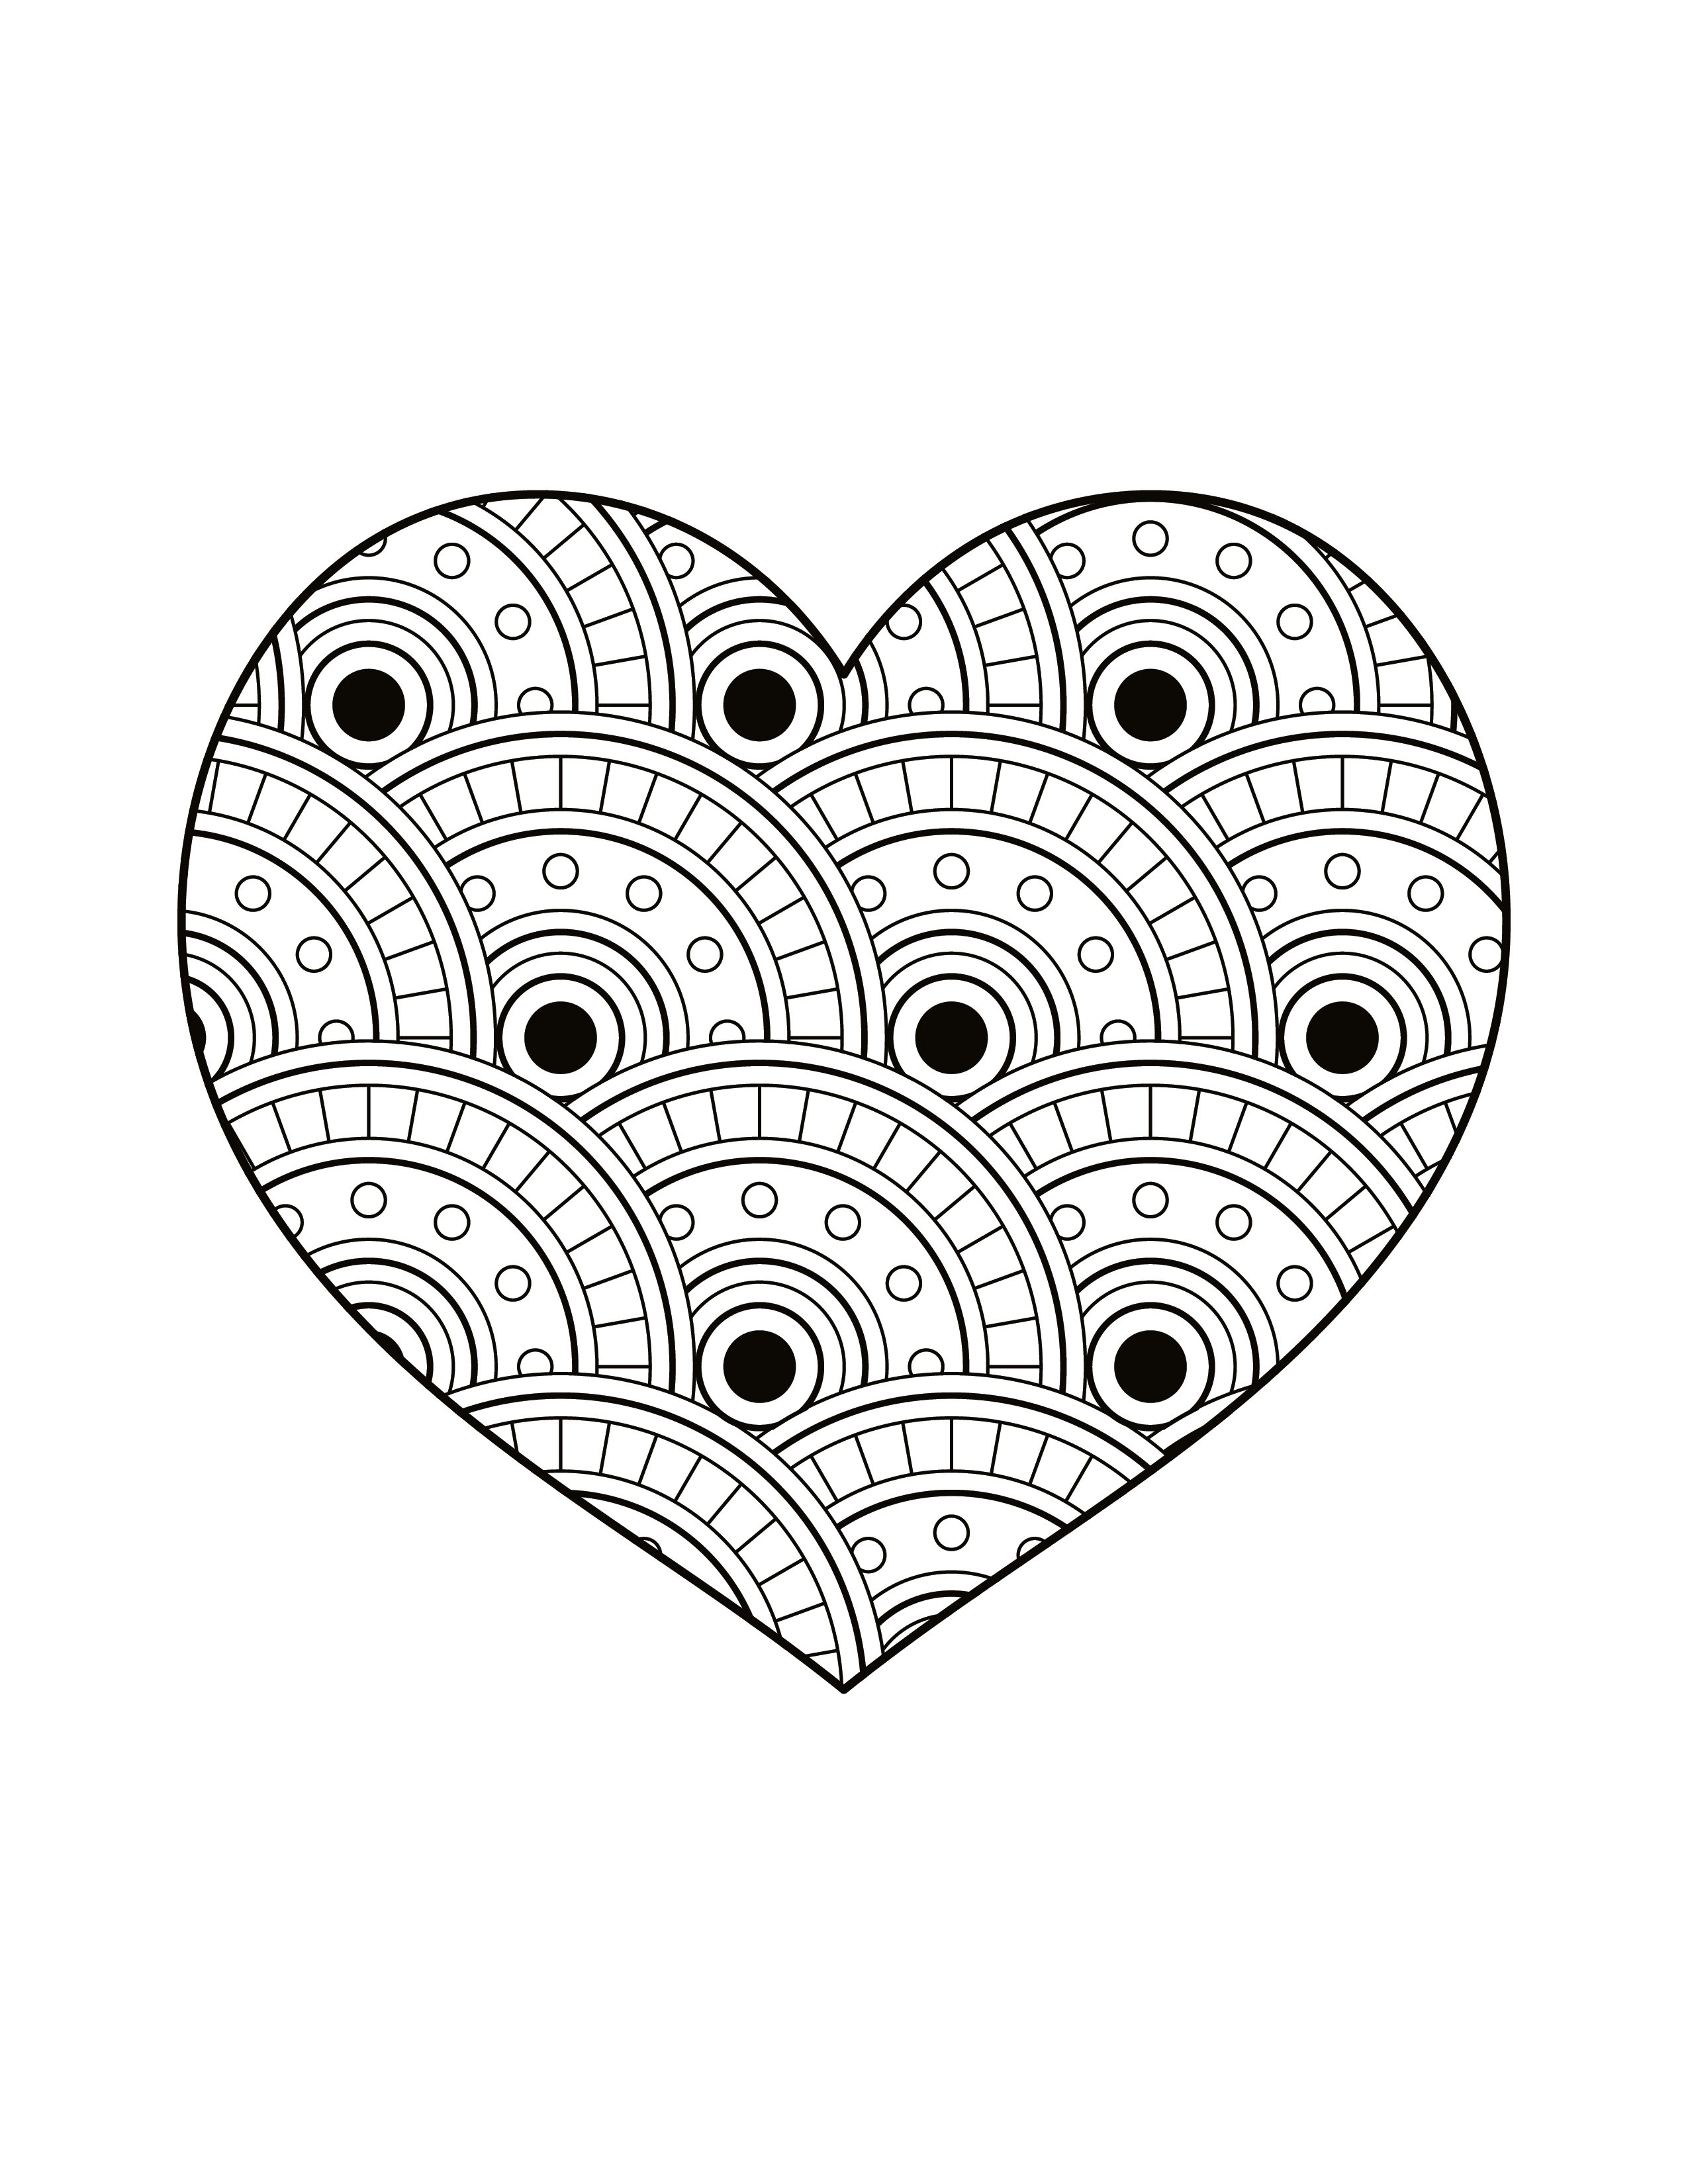 Free Heart Shaped Mandala Coloring Page EPS, Illustrator, JPG, PNG